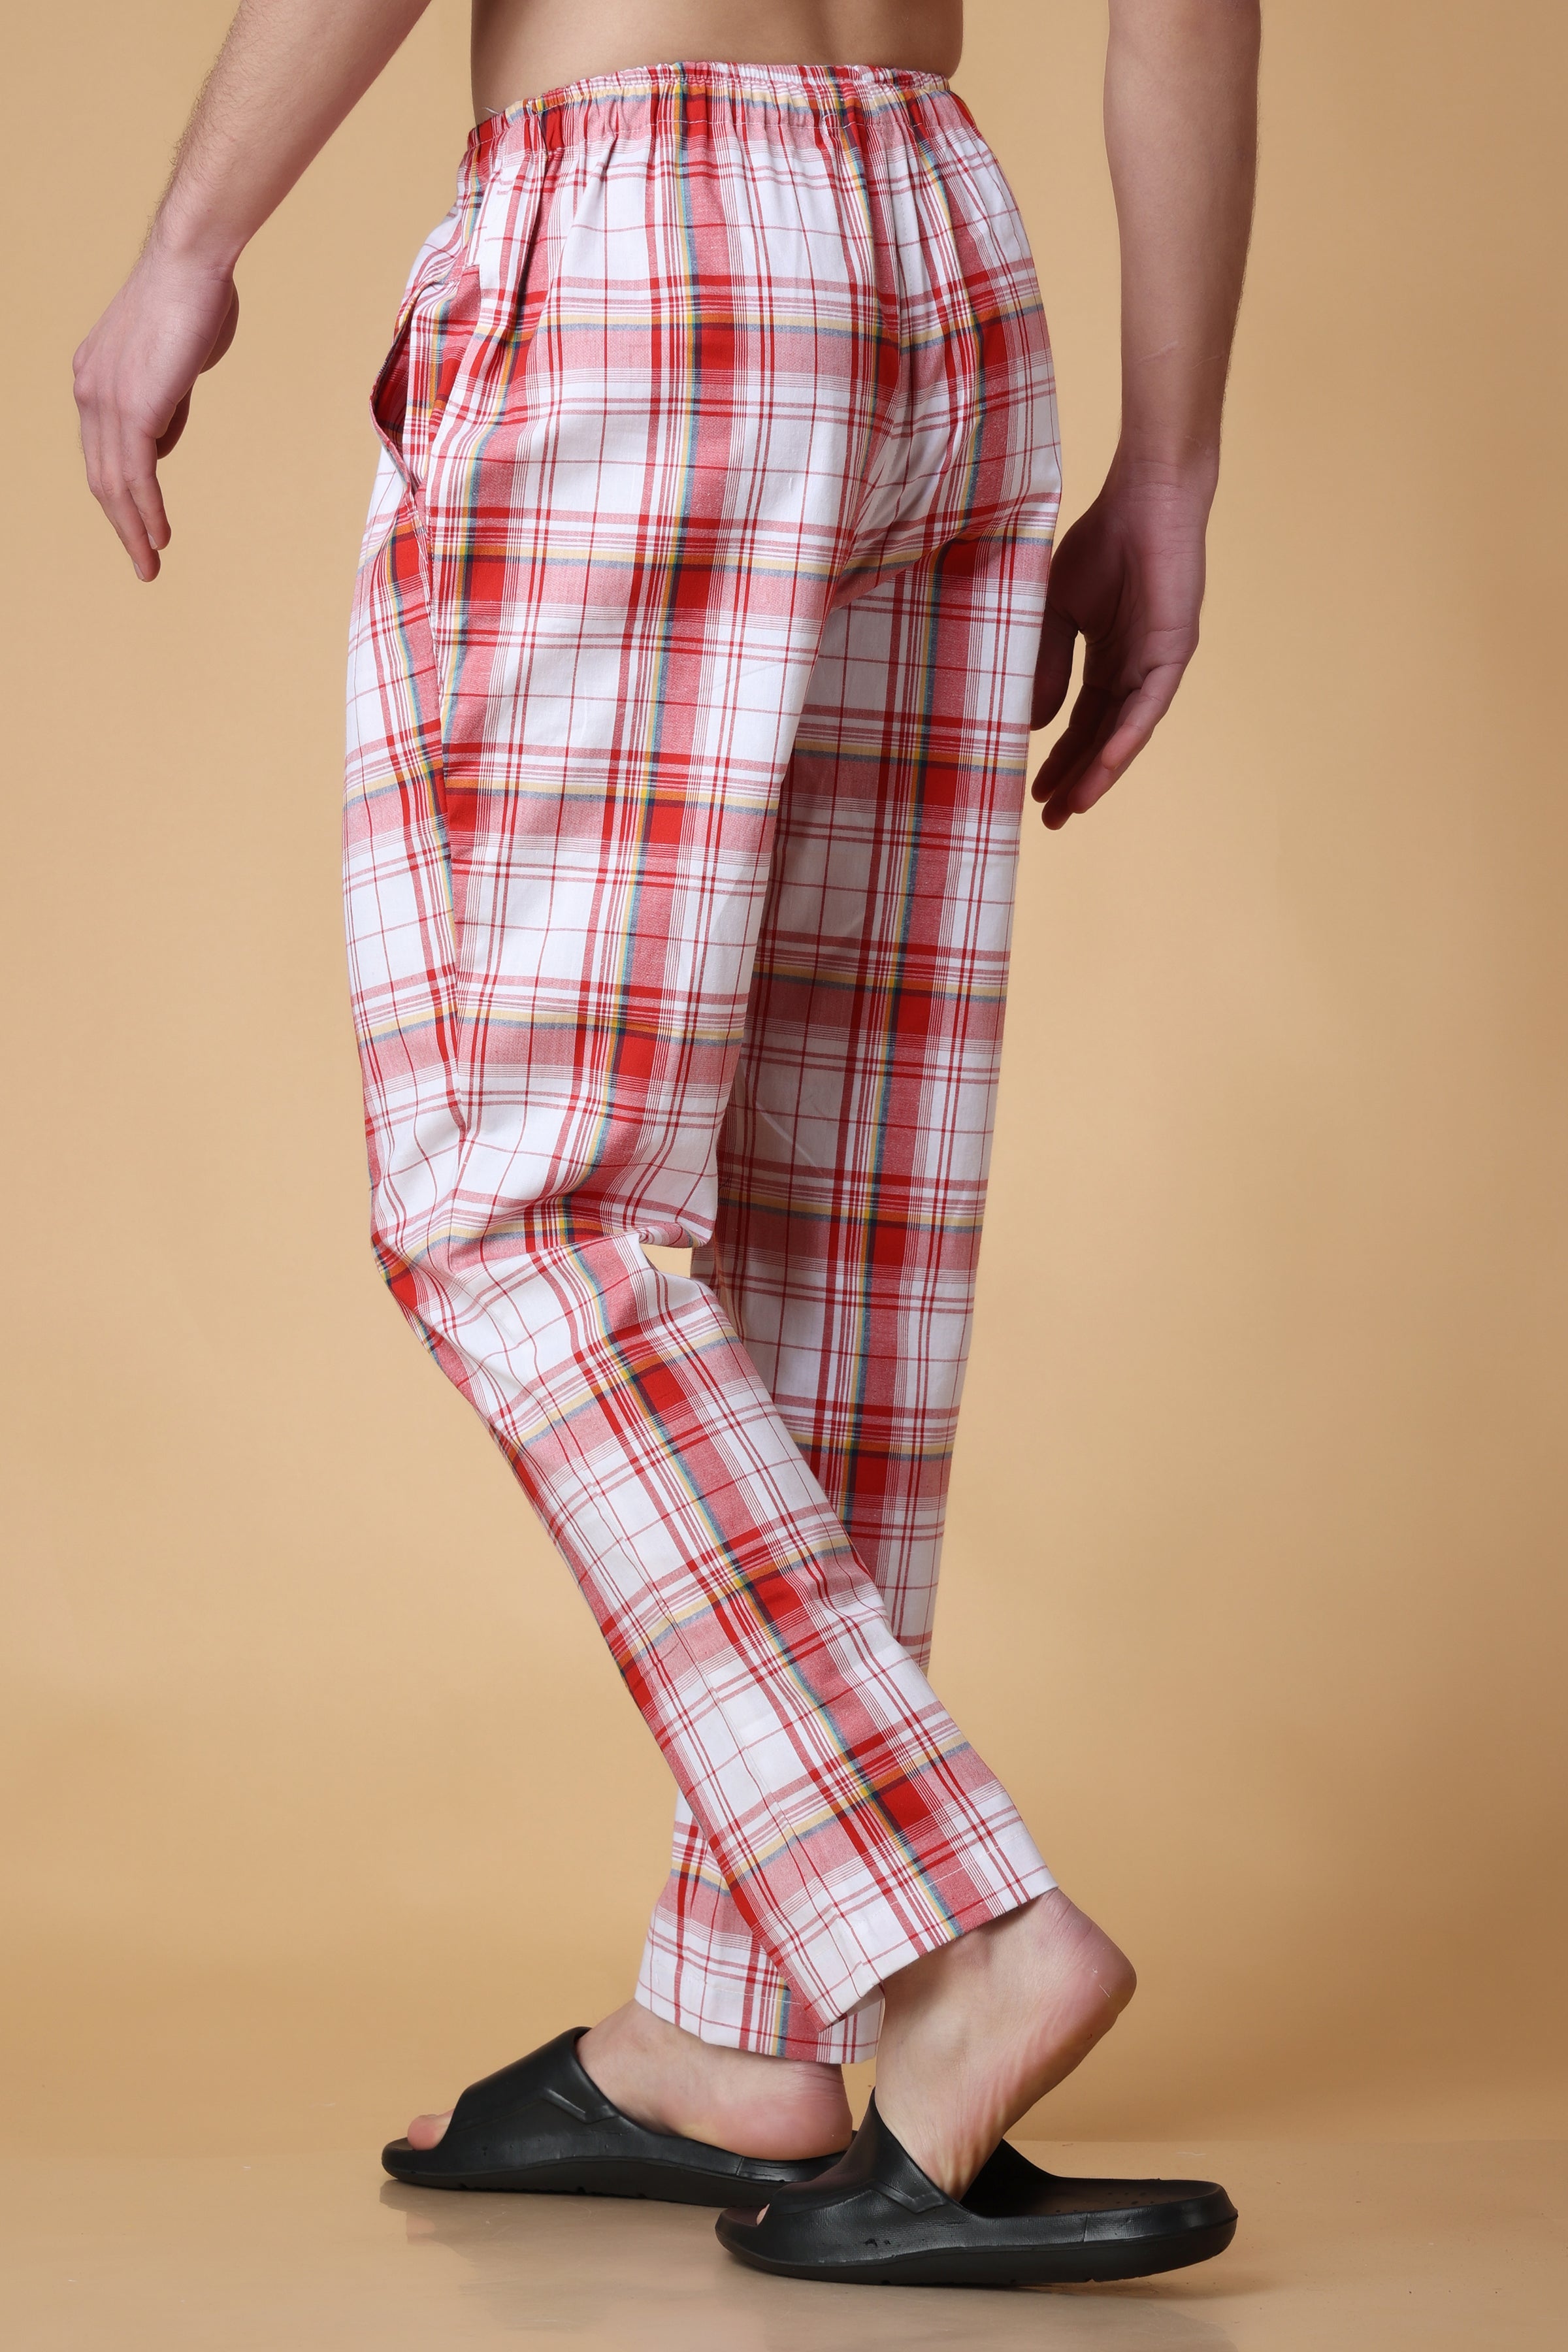 Cotton Regular Wear Printed Ladies Pajama Pants at Rs 100/piece in New Delhi